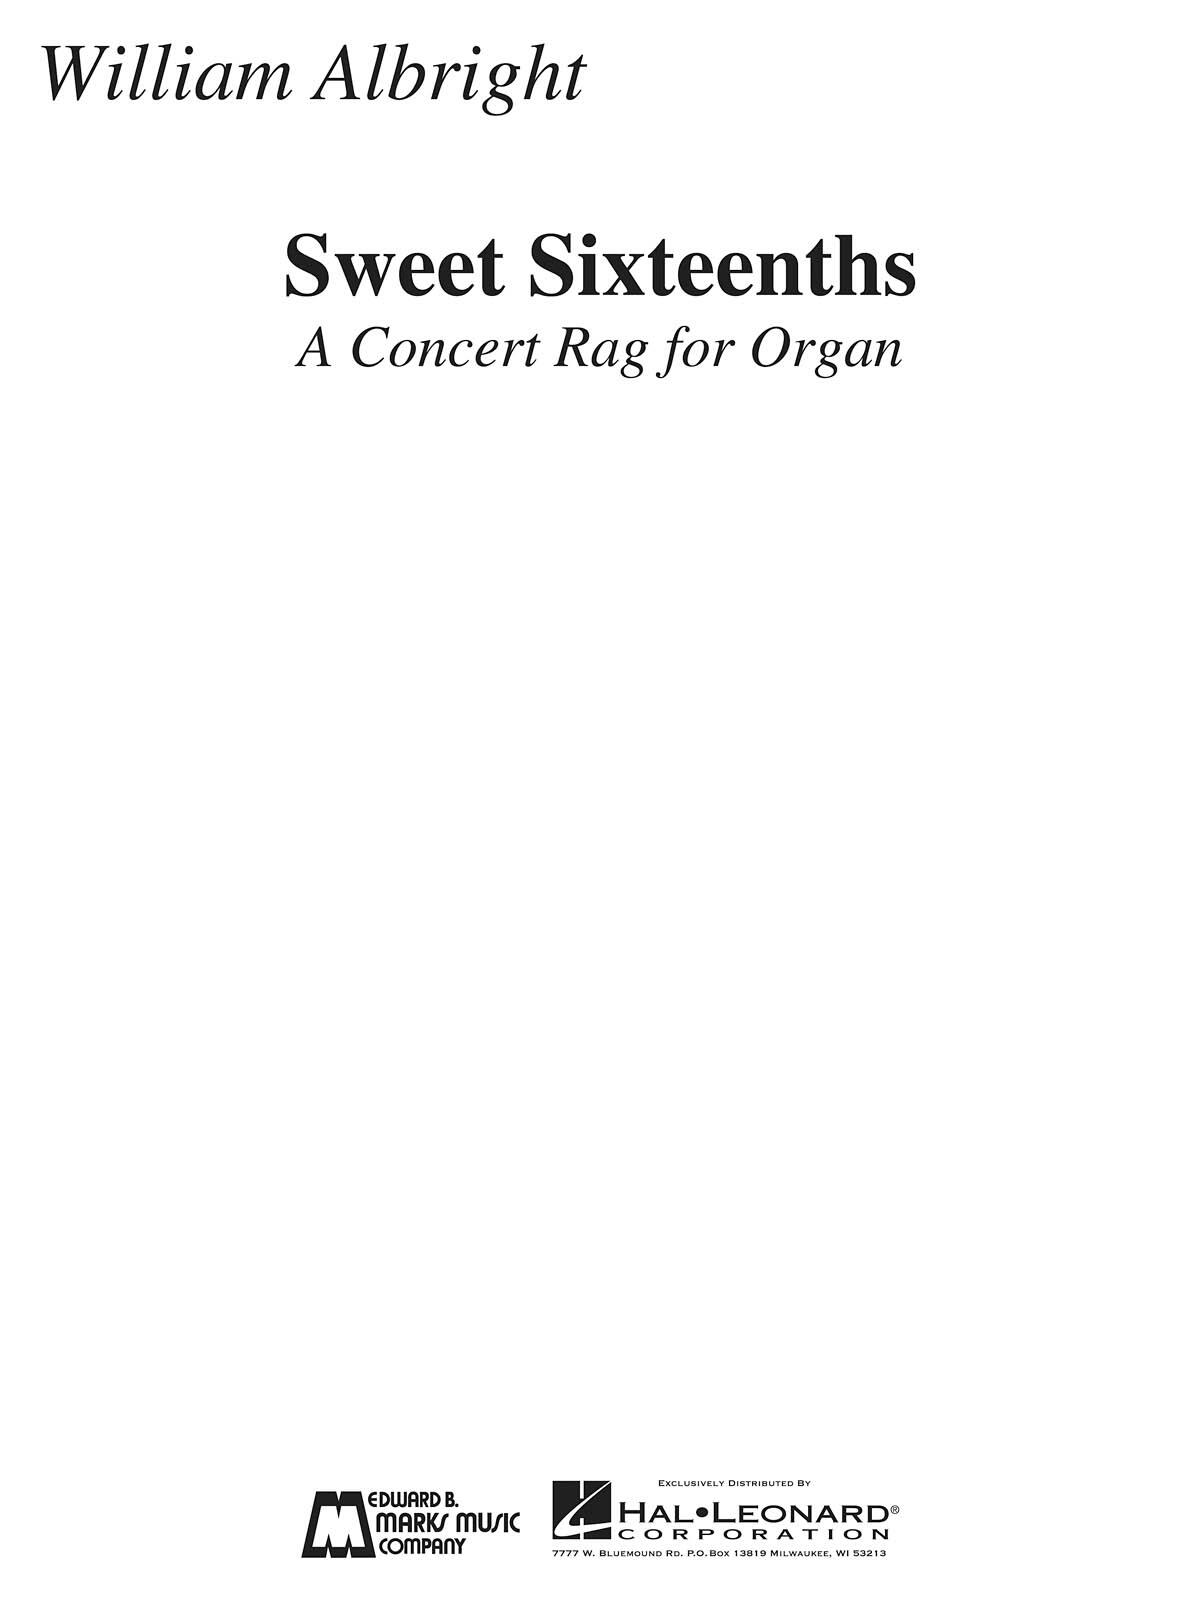 Edward B. Marks Music Company Sweet Sixteenths - A Concert Rag For Organ : photo 1